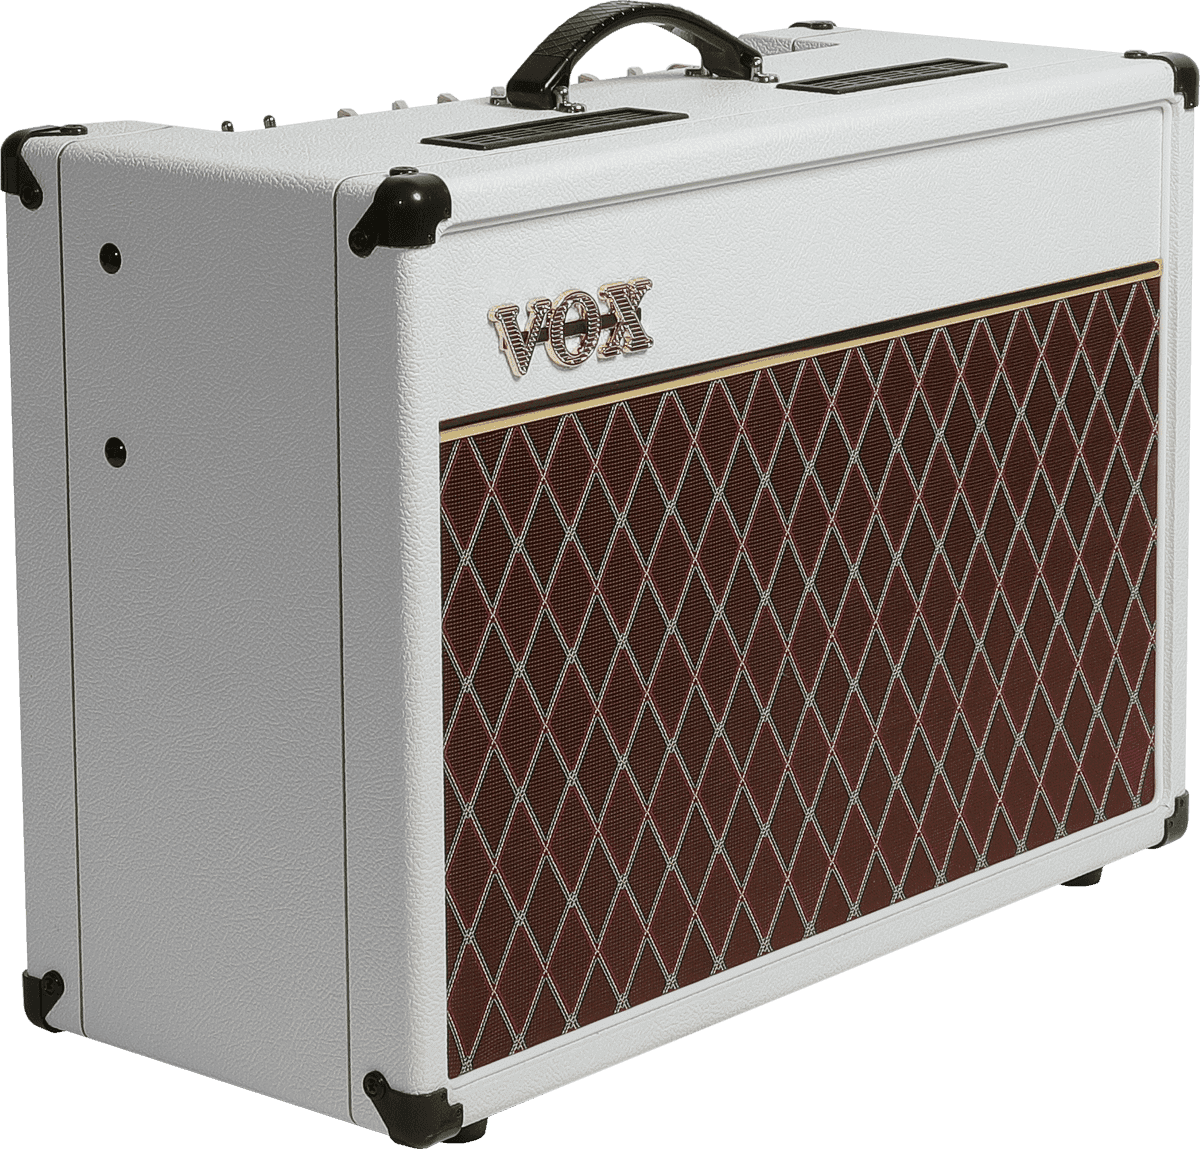 Vox Ac15c1-wb Ltd 15w 1x12 White Bronco - Electric guitar combo amp - Variation 1